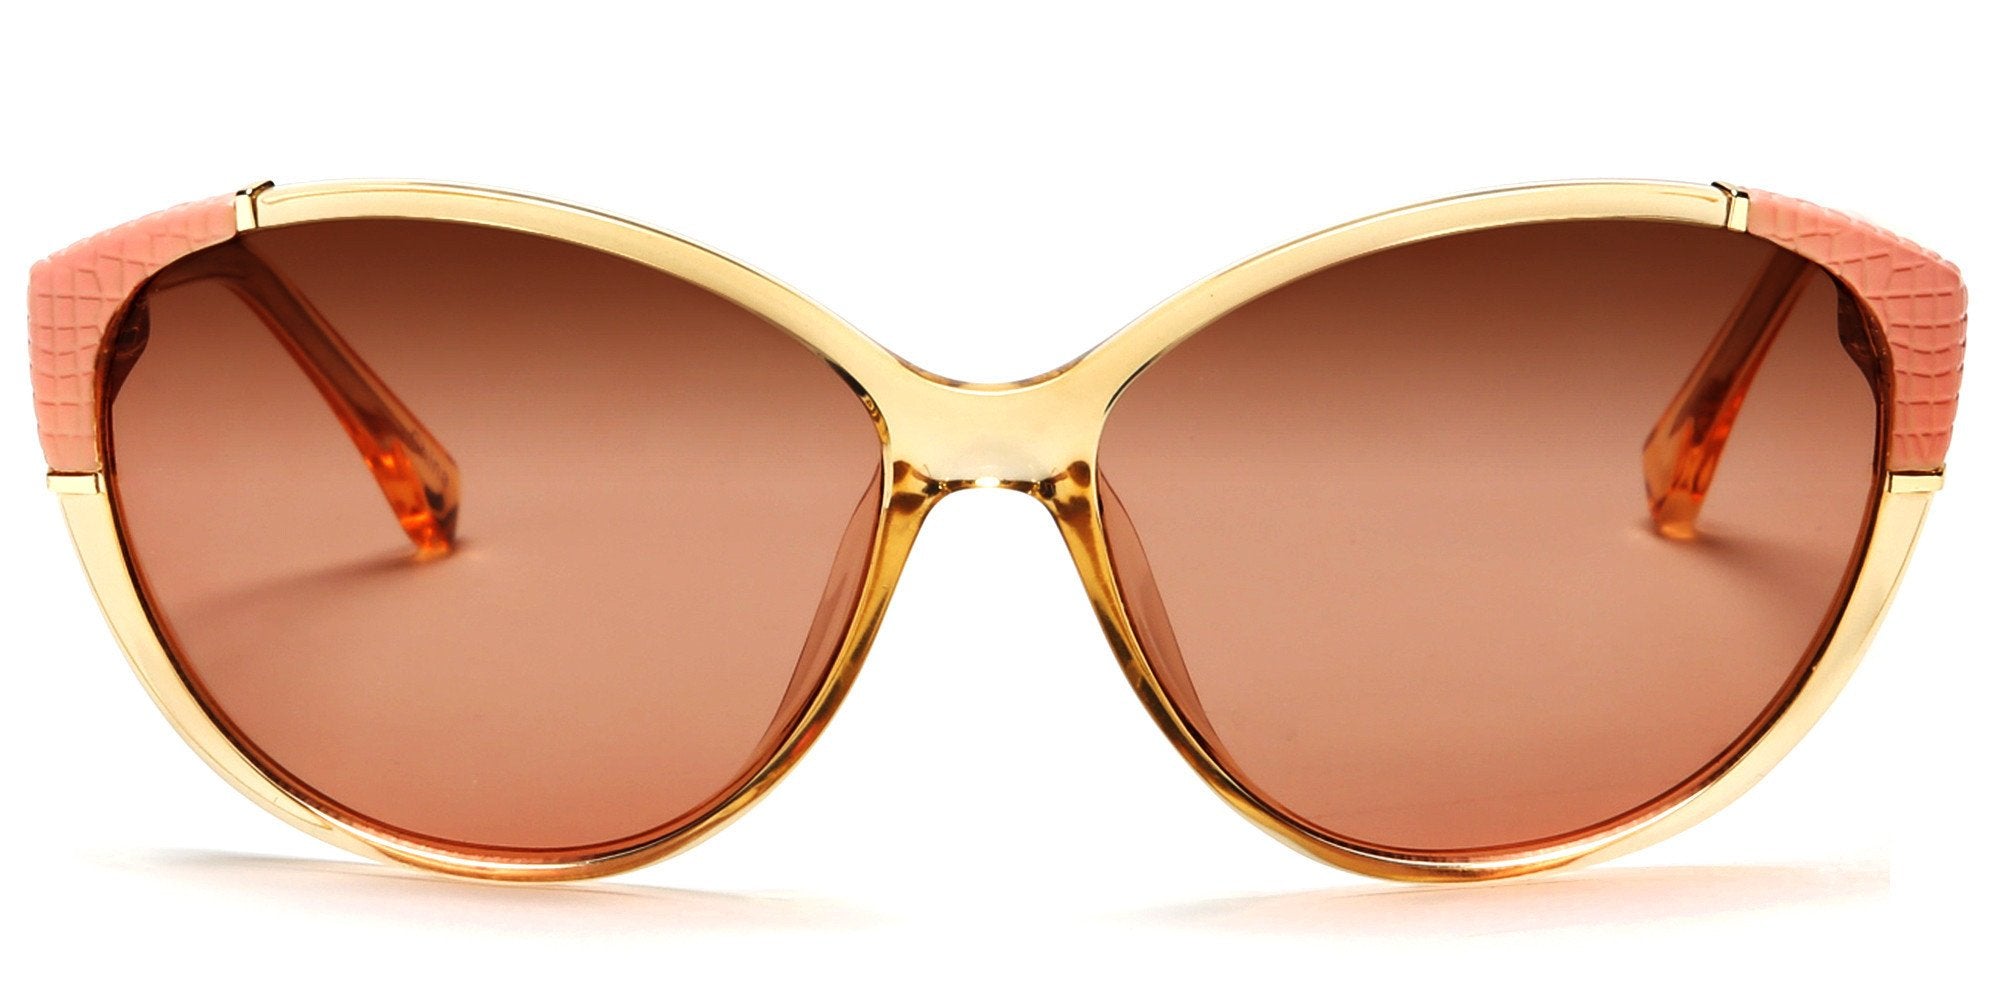 Polarized Marilyn's Cat Eye Fashion Sunglasses Gold-Samba Shades